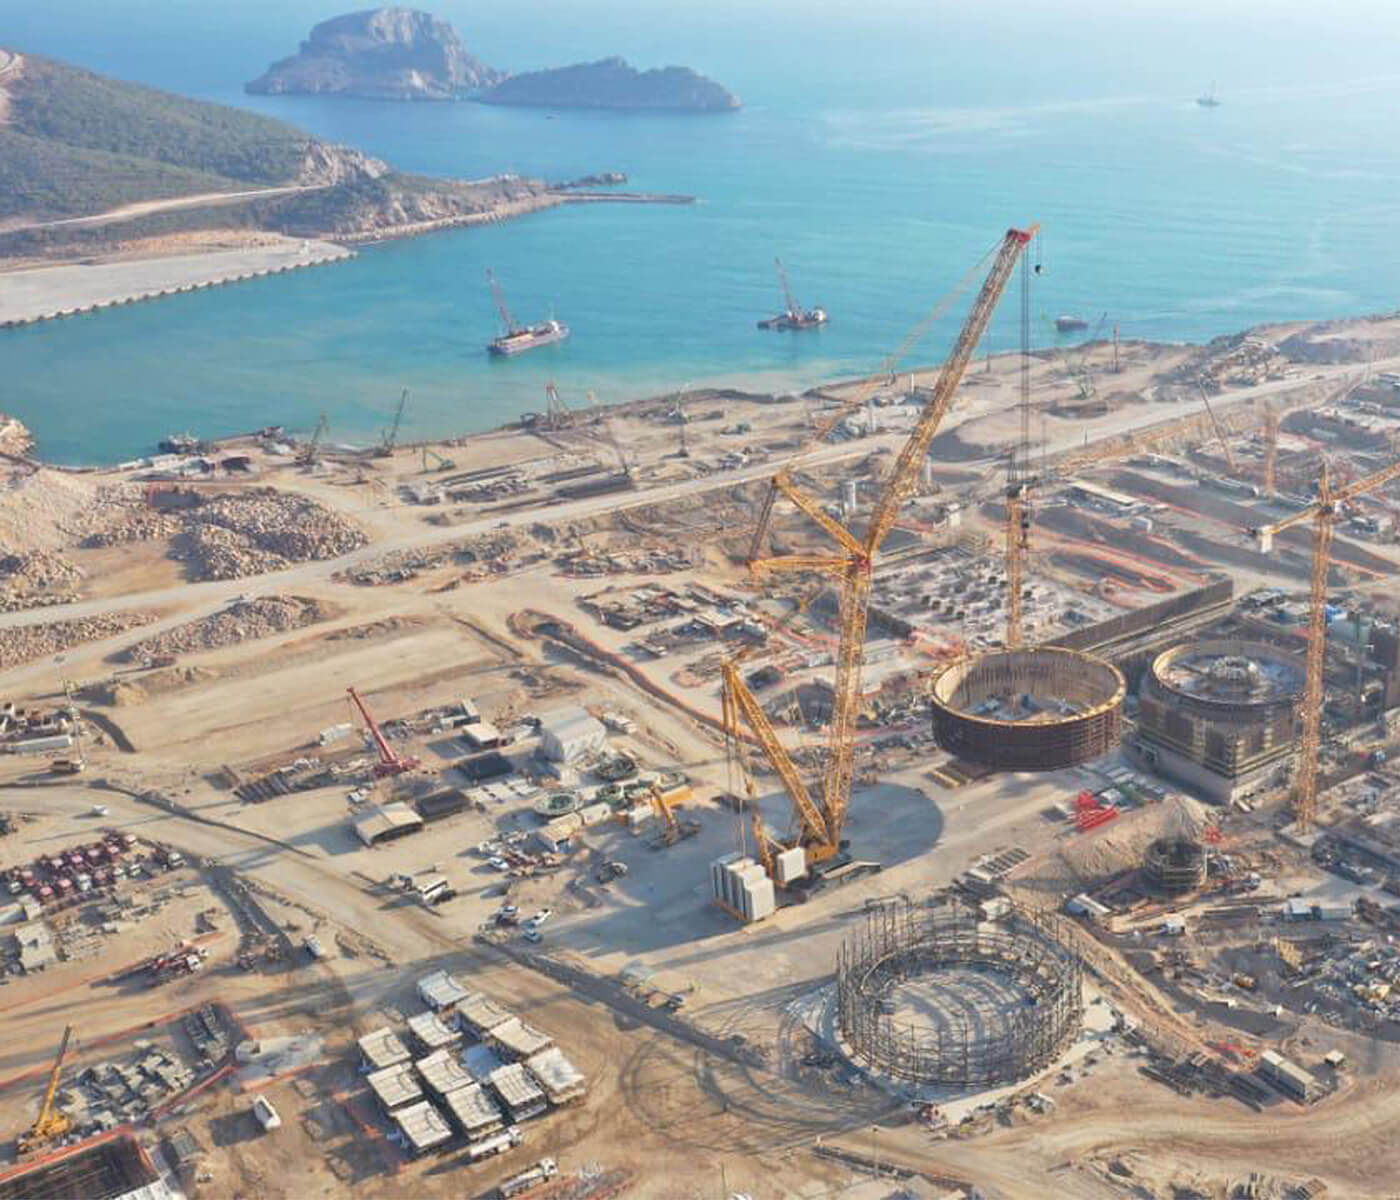 IC İçtaş Holding – Mersin Akkuyu Nuclear Power Plant